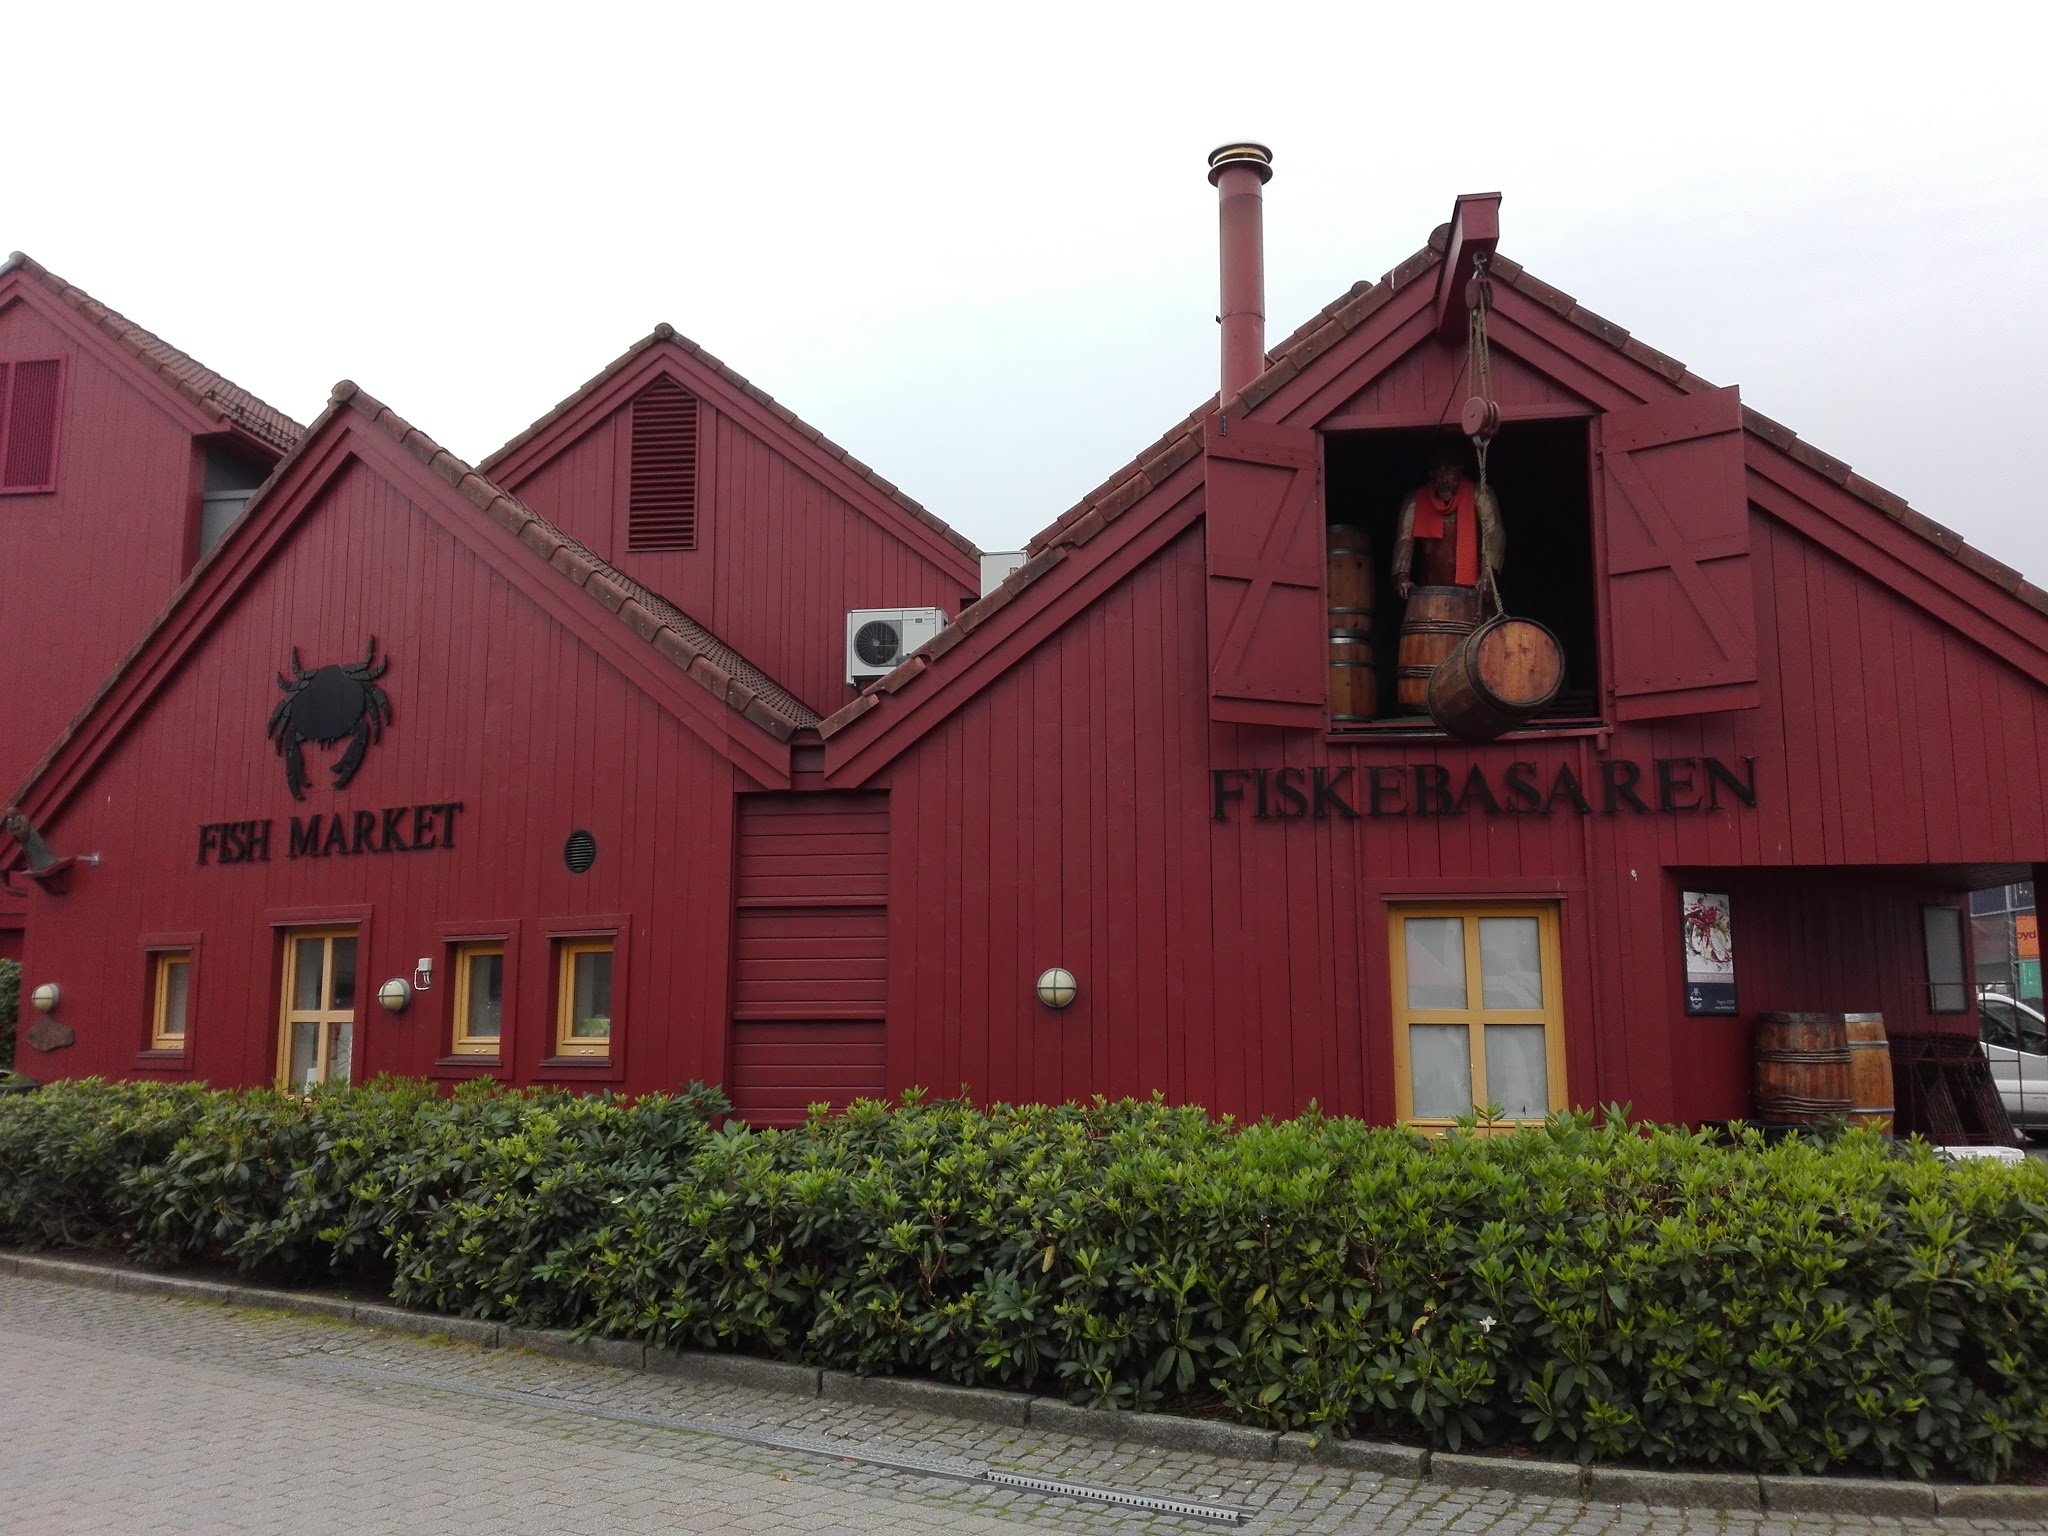 Fiskebasaren, el mercado de pescado (Kristiansand) (@mibaulviajero)